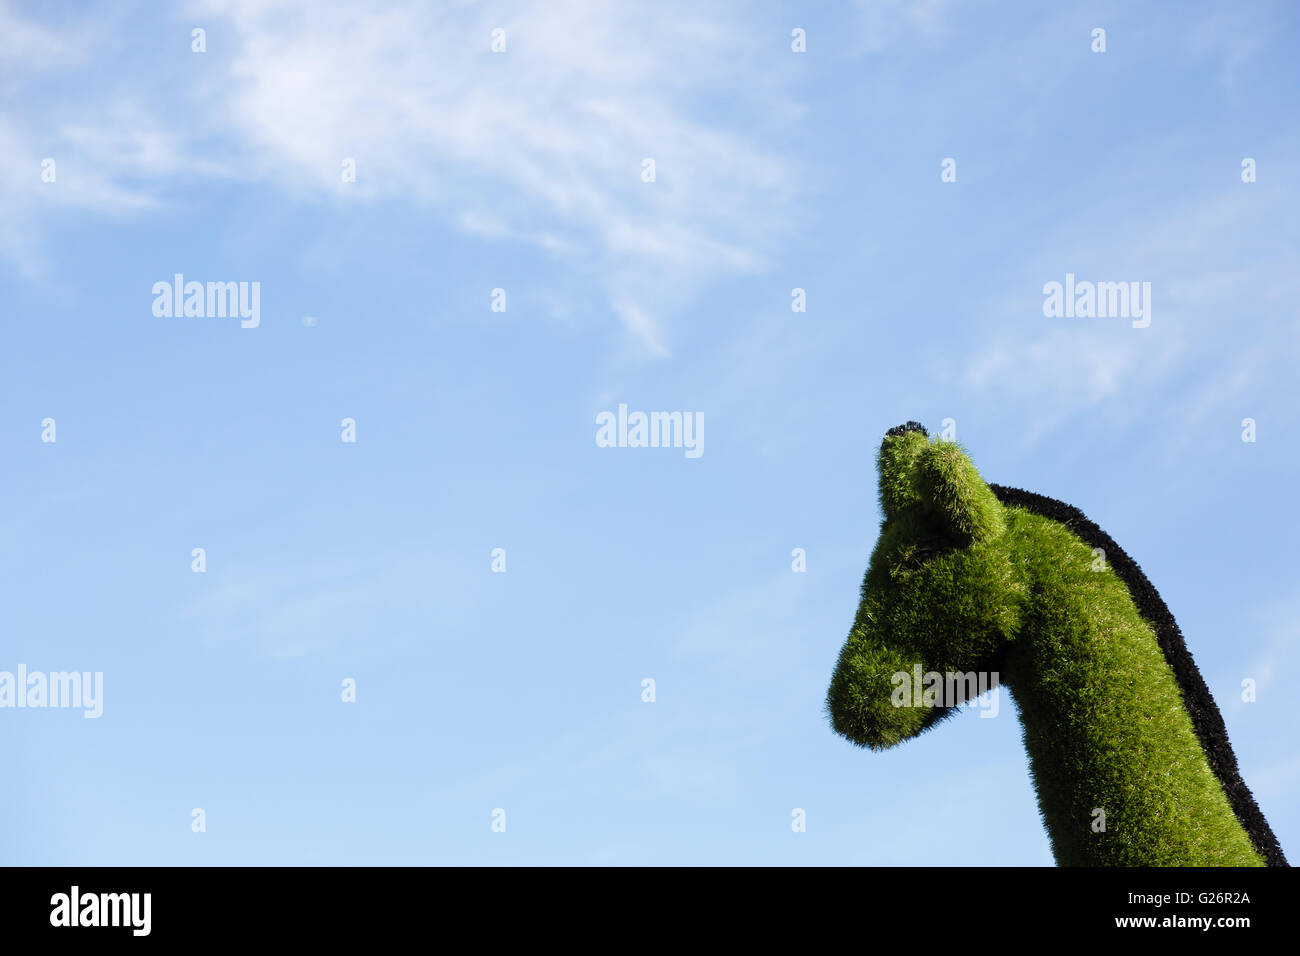 Chelsea Flower Show, London, UK. Giraffe geformt aus Grass gegen blauen Himmel auf dem Easigrass Stand. Stockfoto